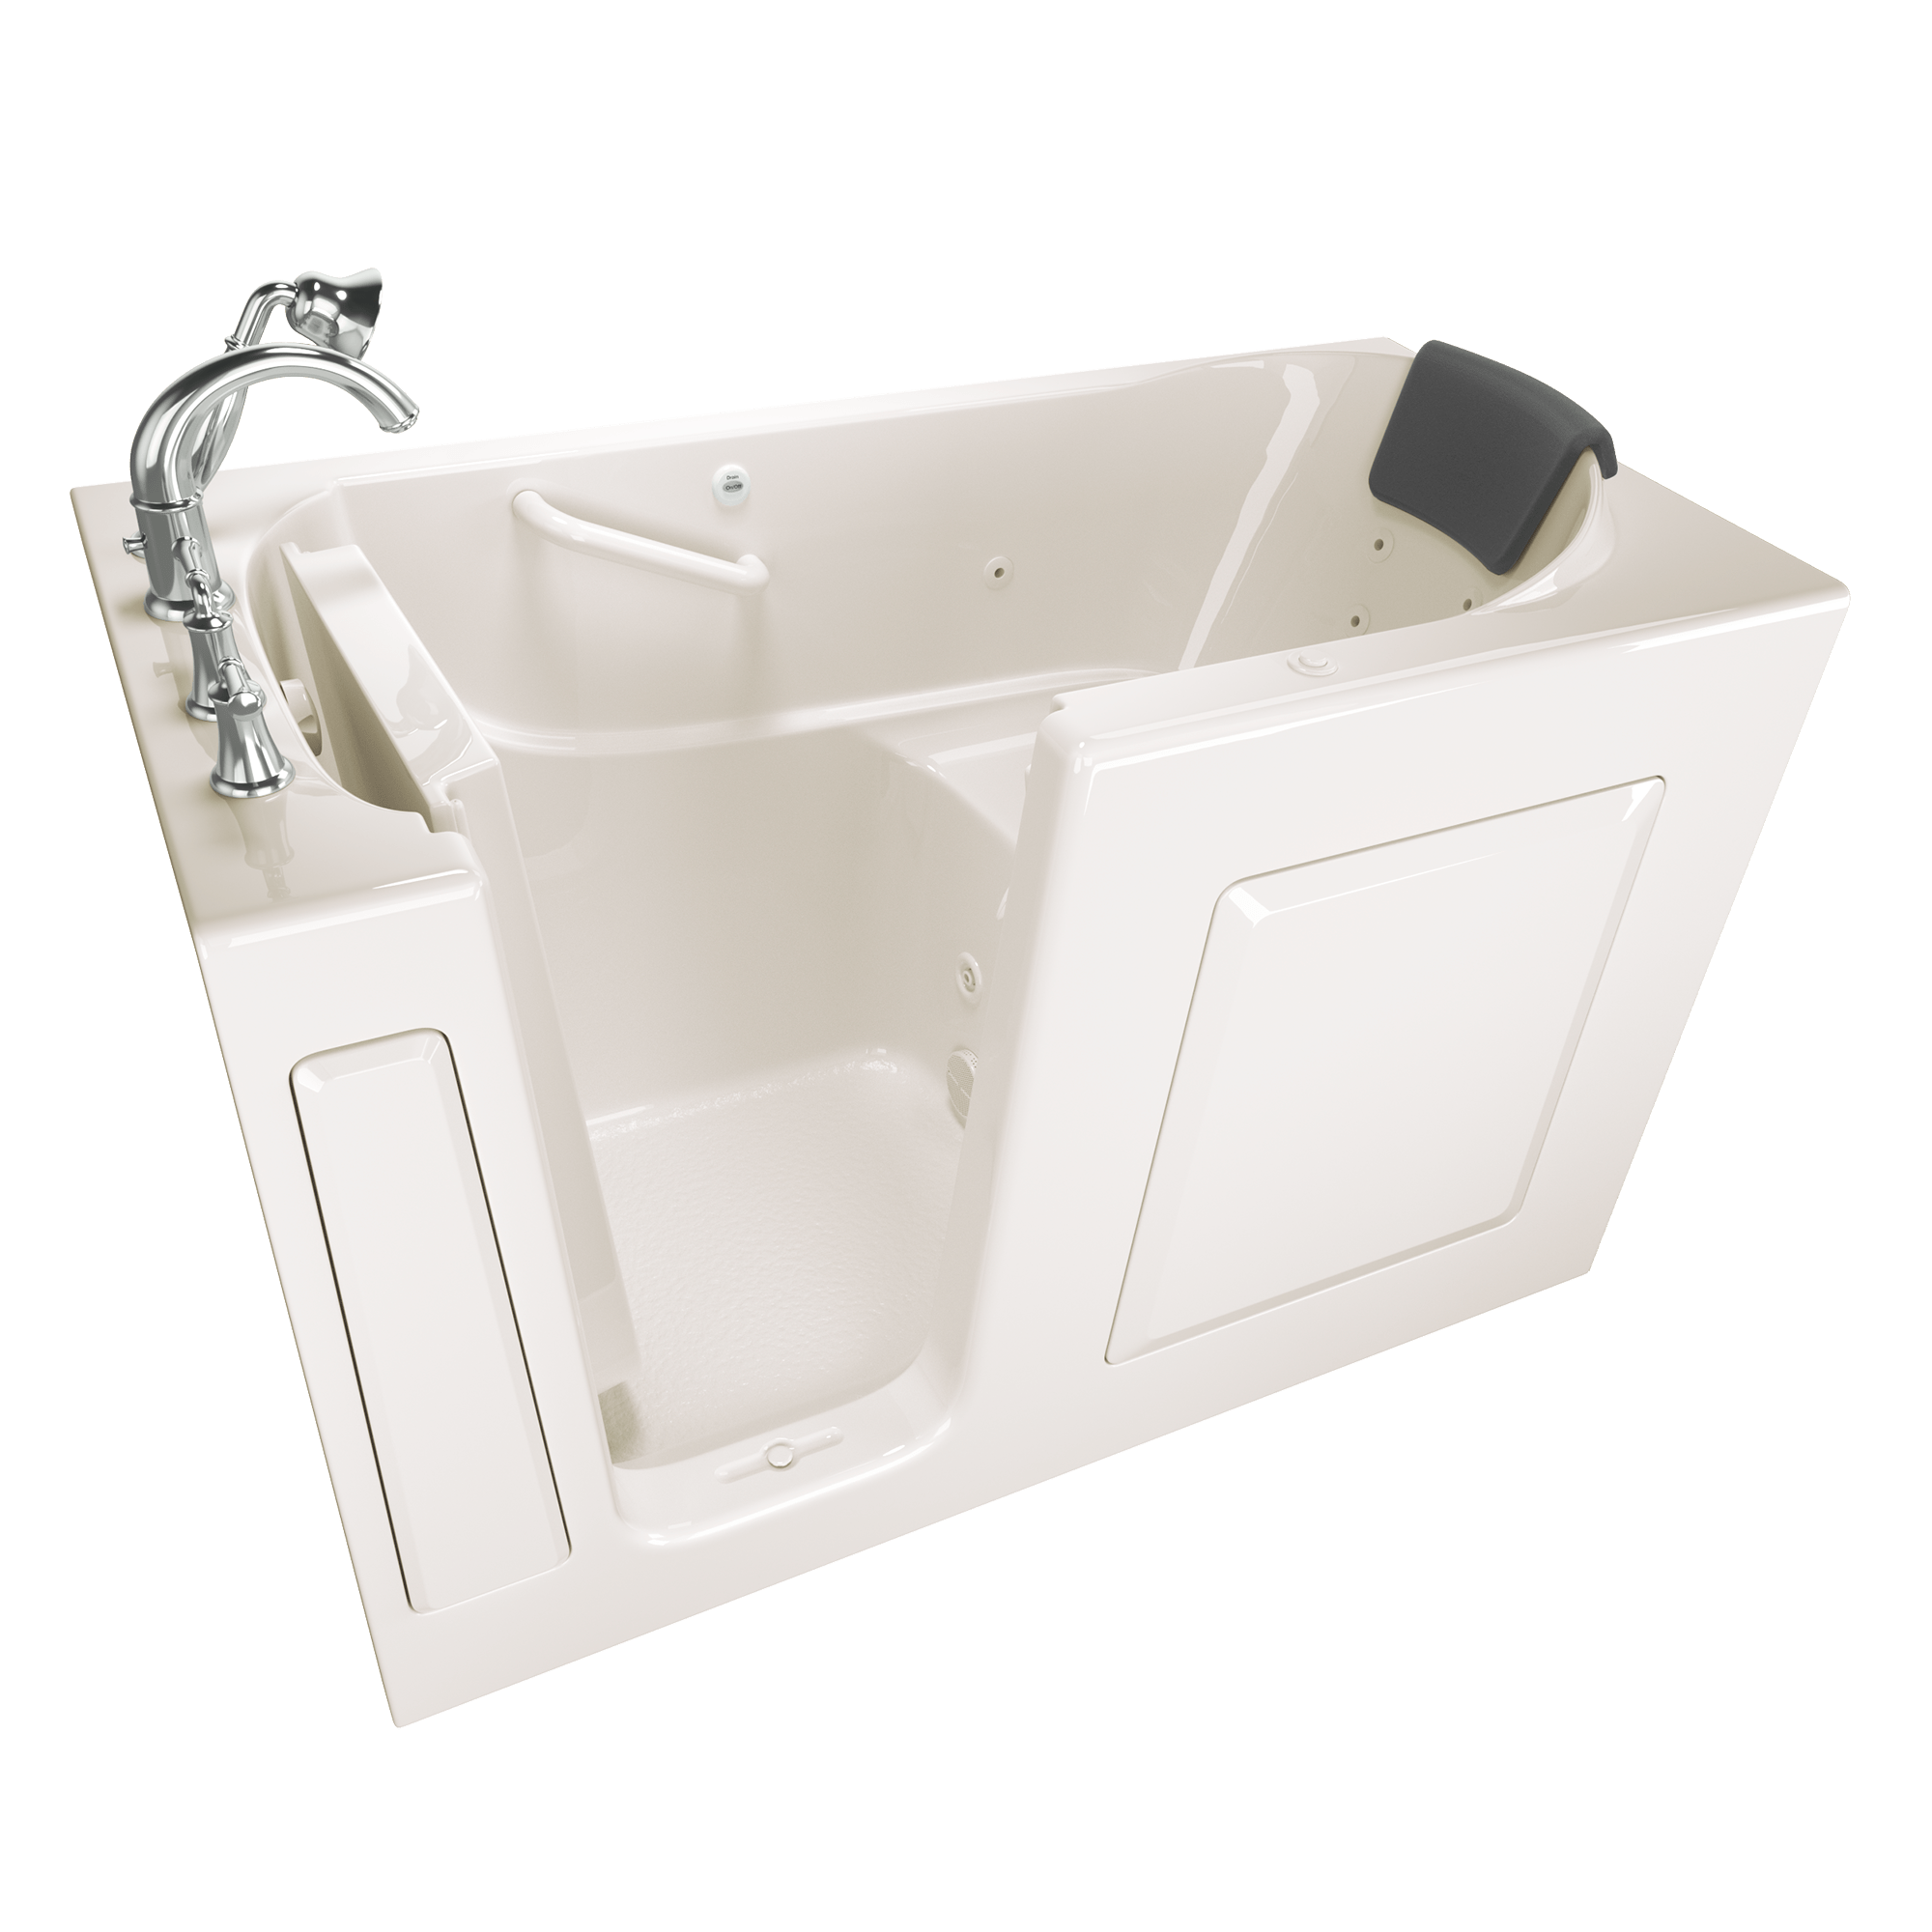 Gelcoat Premium Series 60x30 Inch Walk-In Bathtub with Jet Massage System - Left Hand Door and Drain